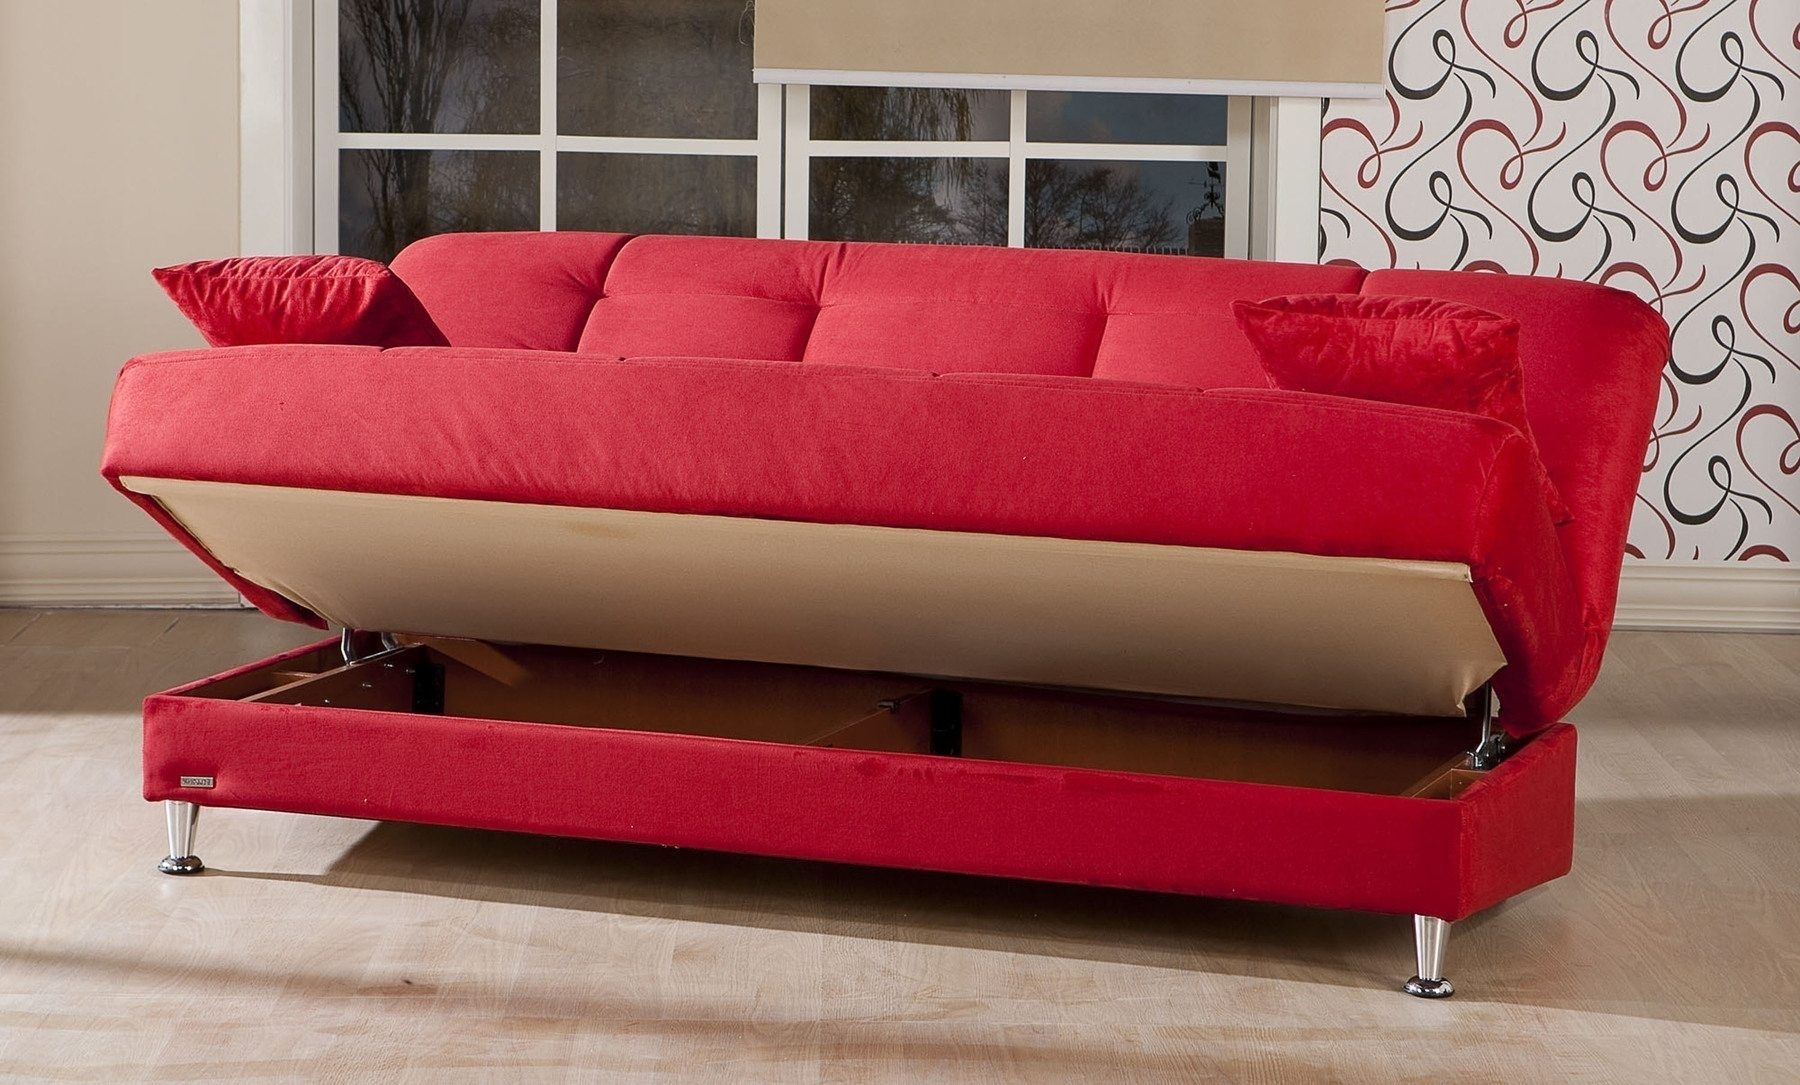 Red Sleeper Sofa Large Kitchen & Dining Mattresses Dressers 3em 27 Regarding Red Sleeper Sofas (View 4 of 10)